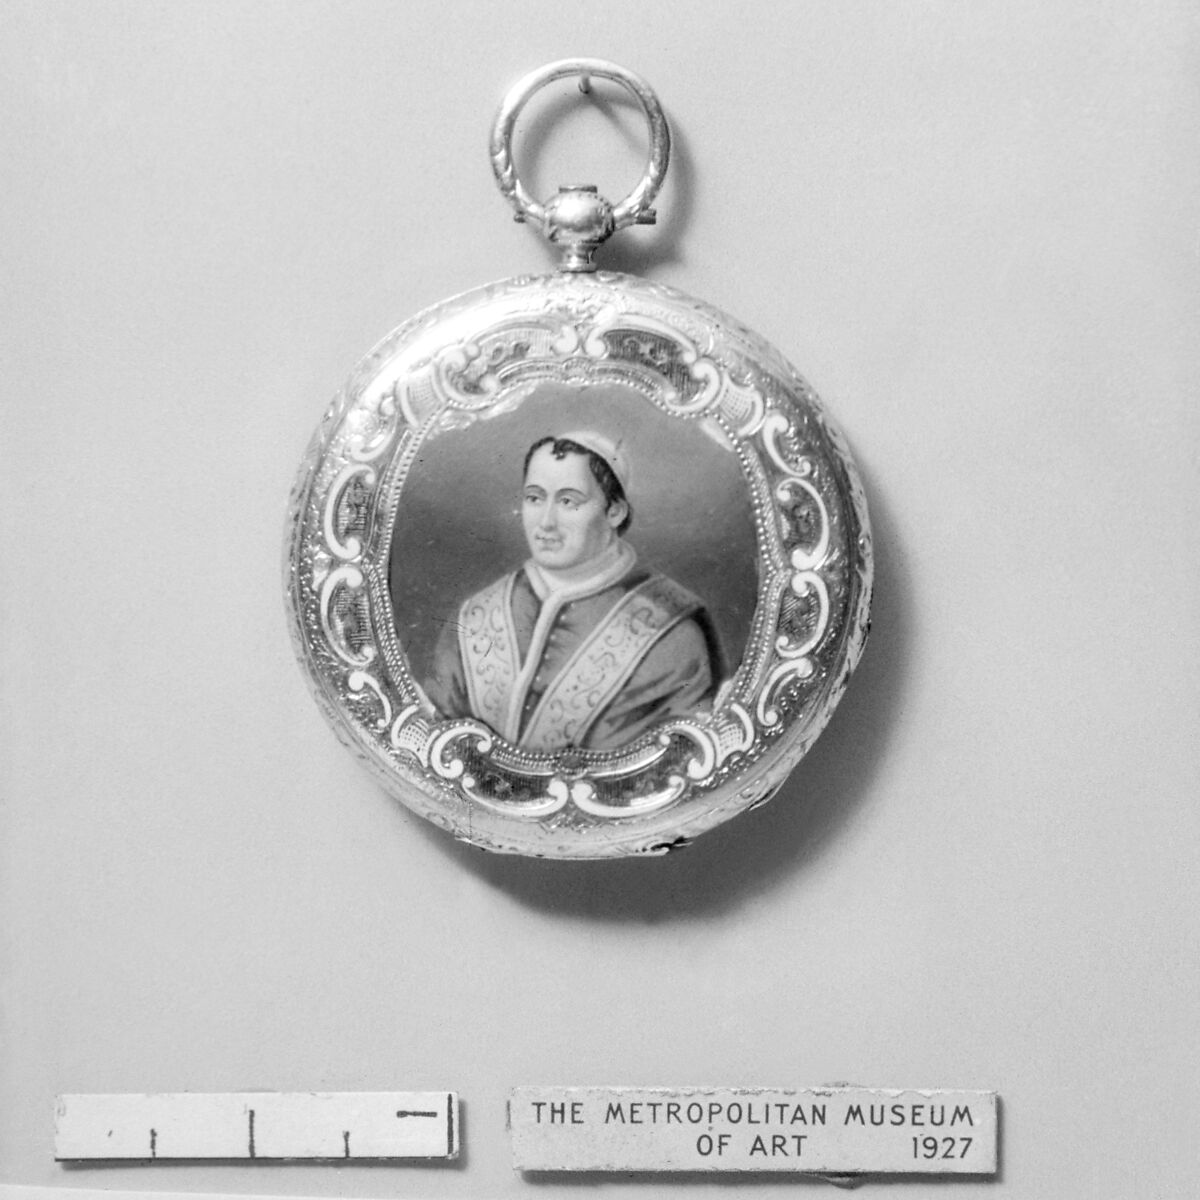 Watch with enamel portrait of Pope Pius VII (1742–1823), Watchmaker: Vaucher neveu, Gold, enamel, jewels, probably Swiss 